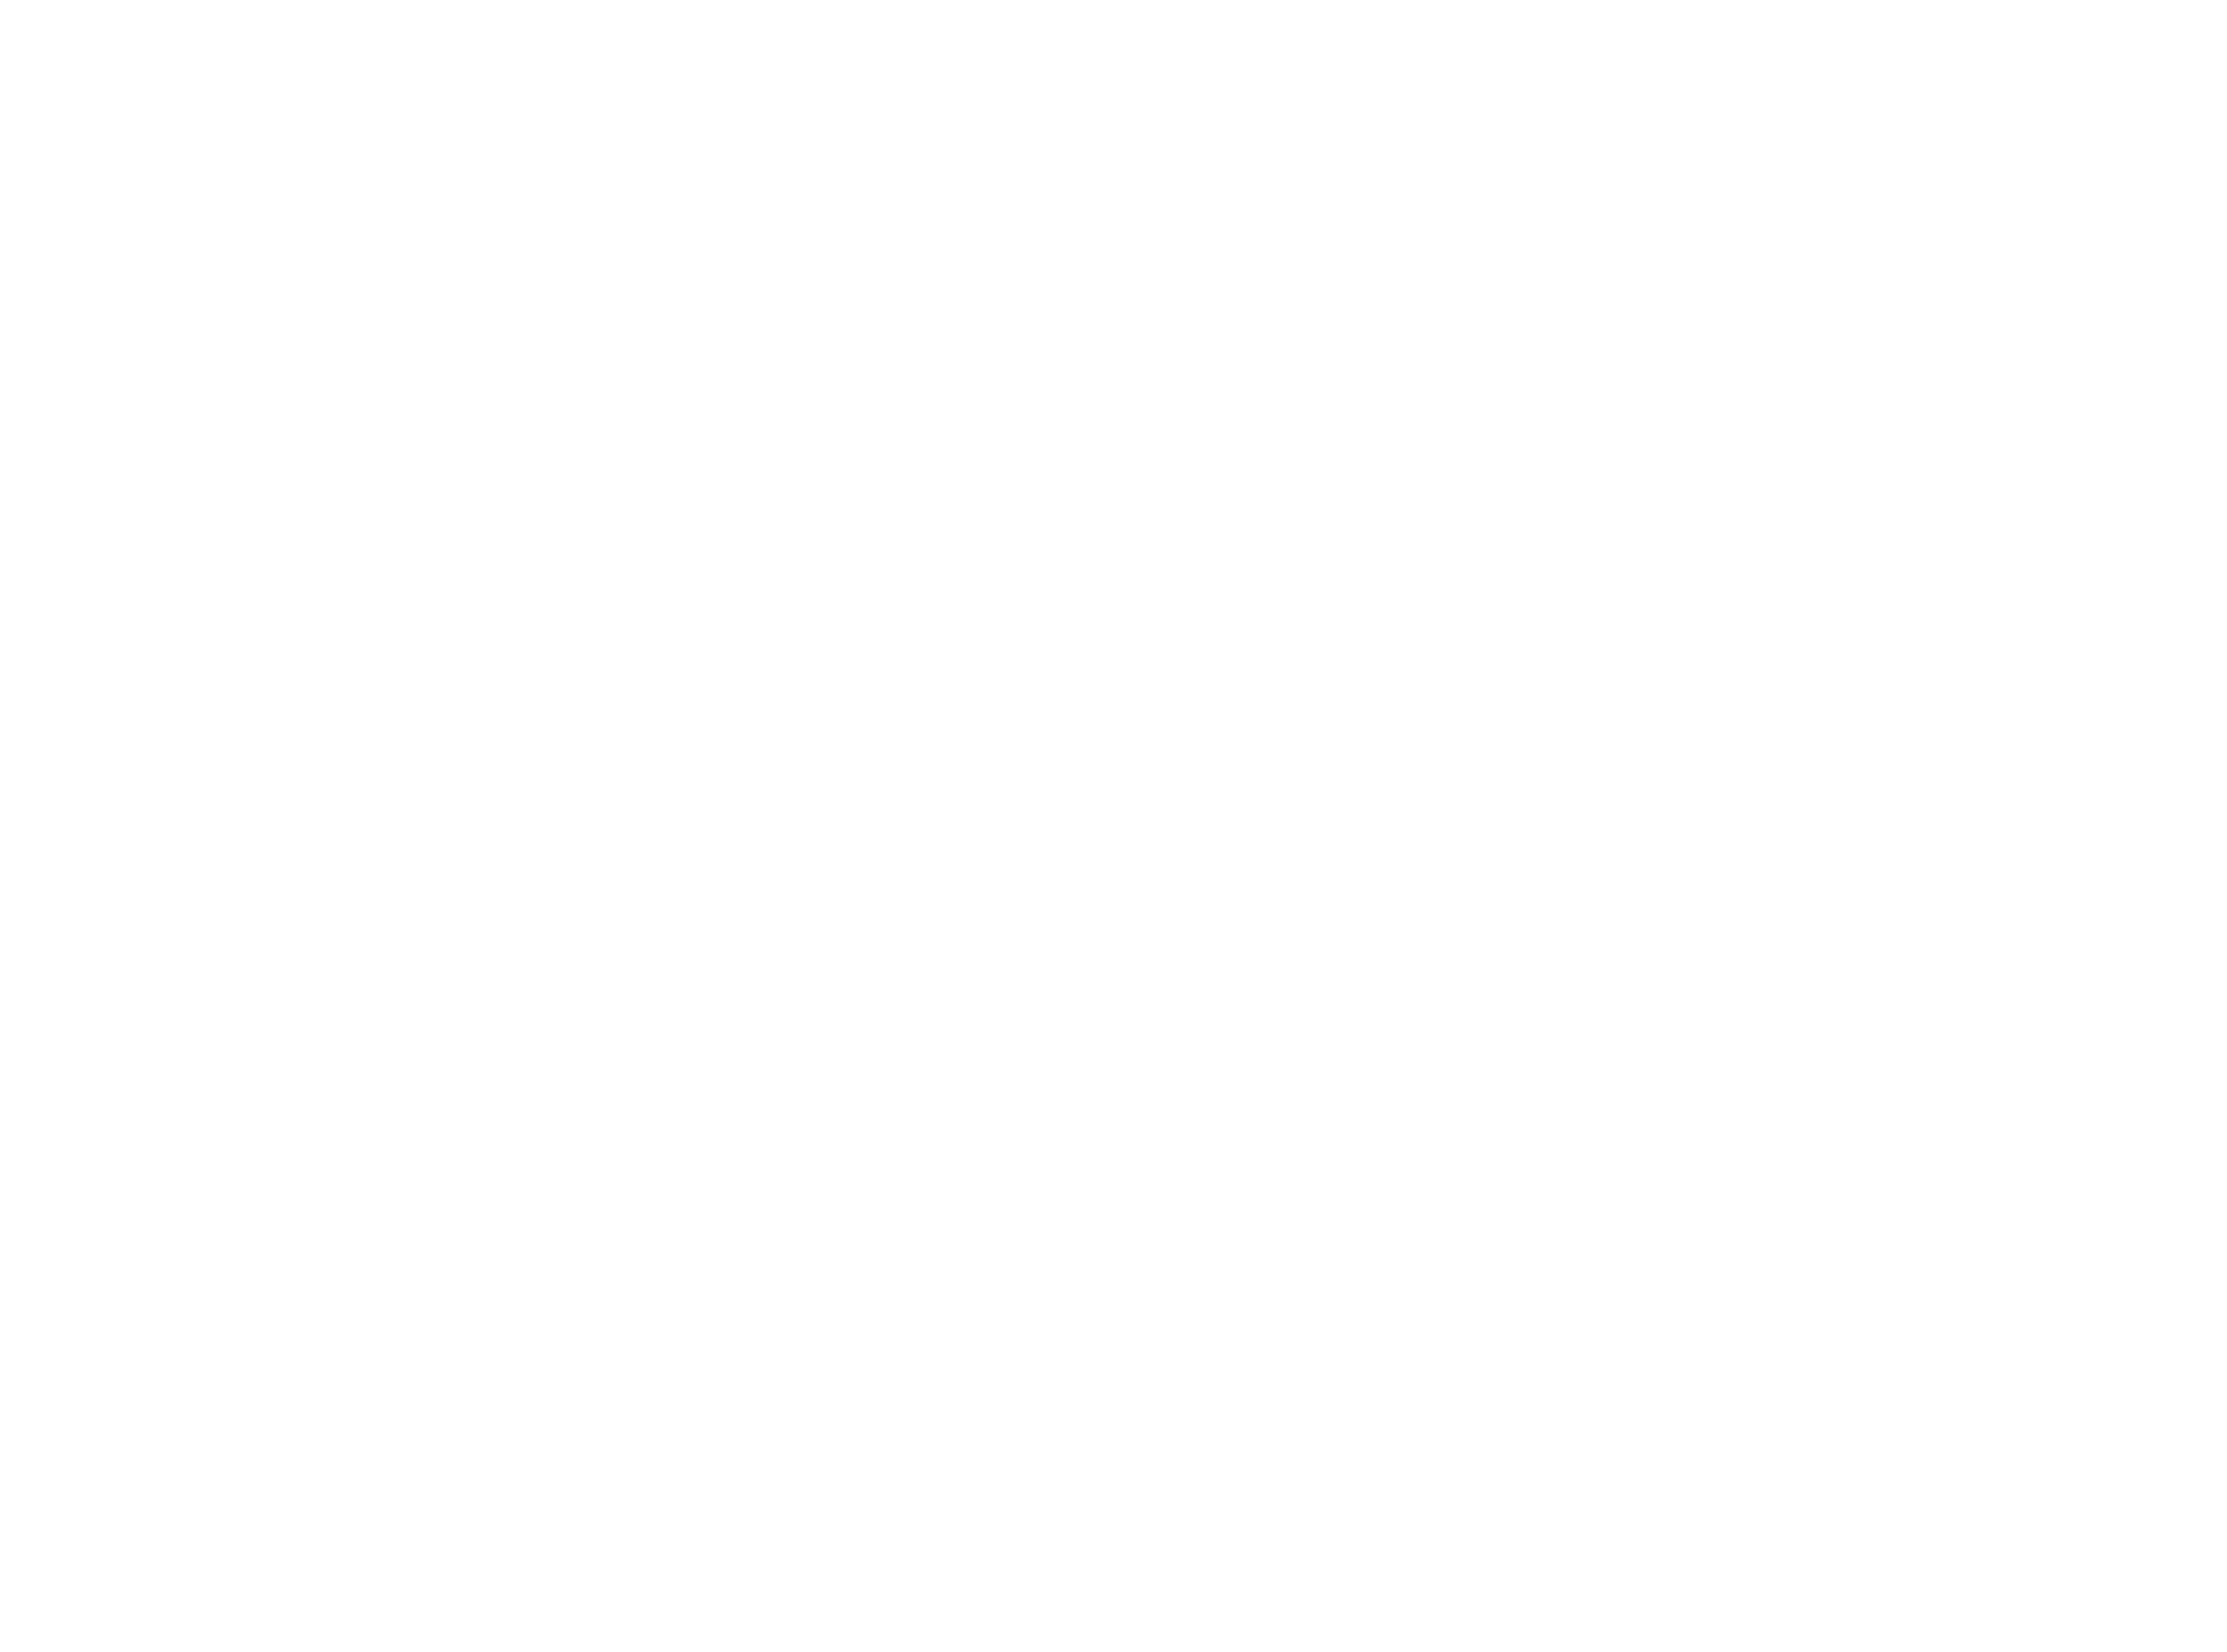 Create yourself